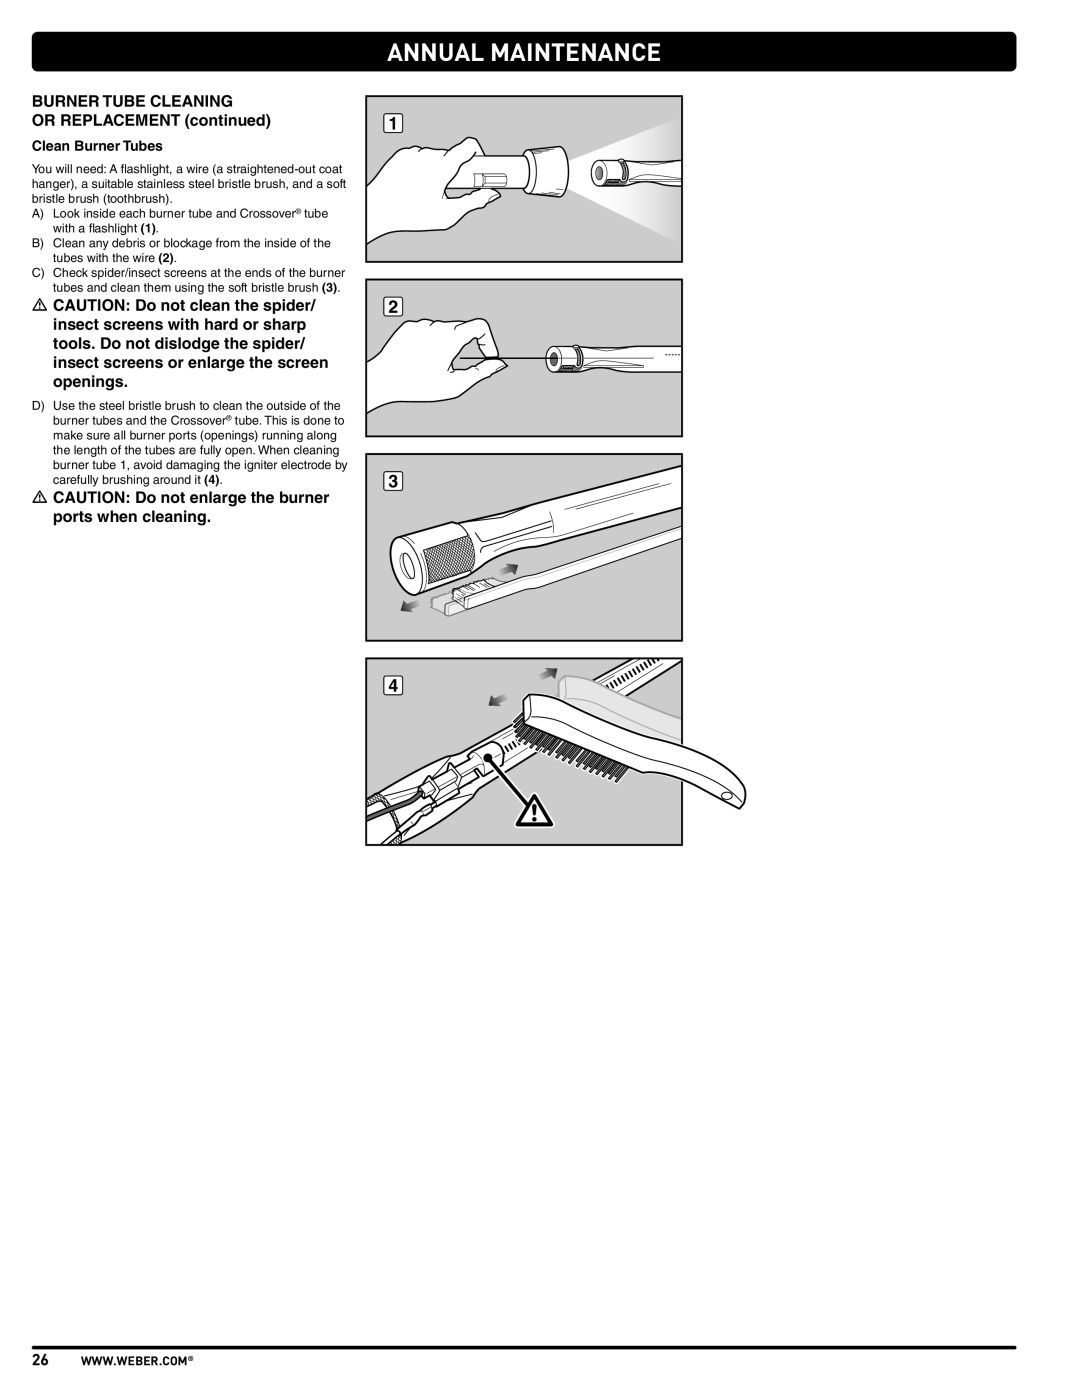 Weber PL - PG. 59 57205 manual Annual Maintenance, Clean Burner Tubes 